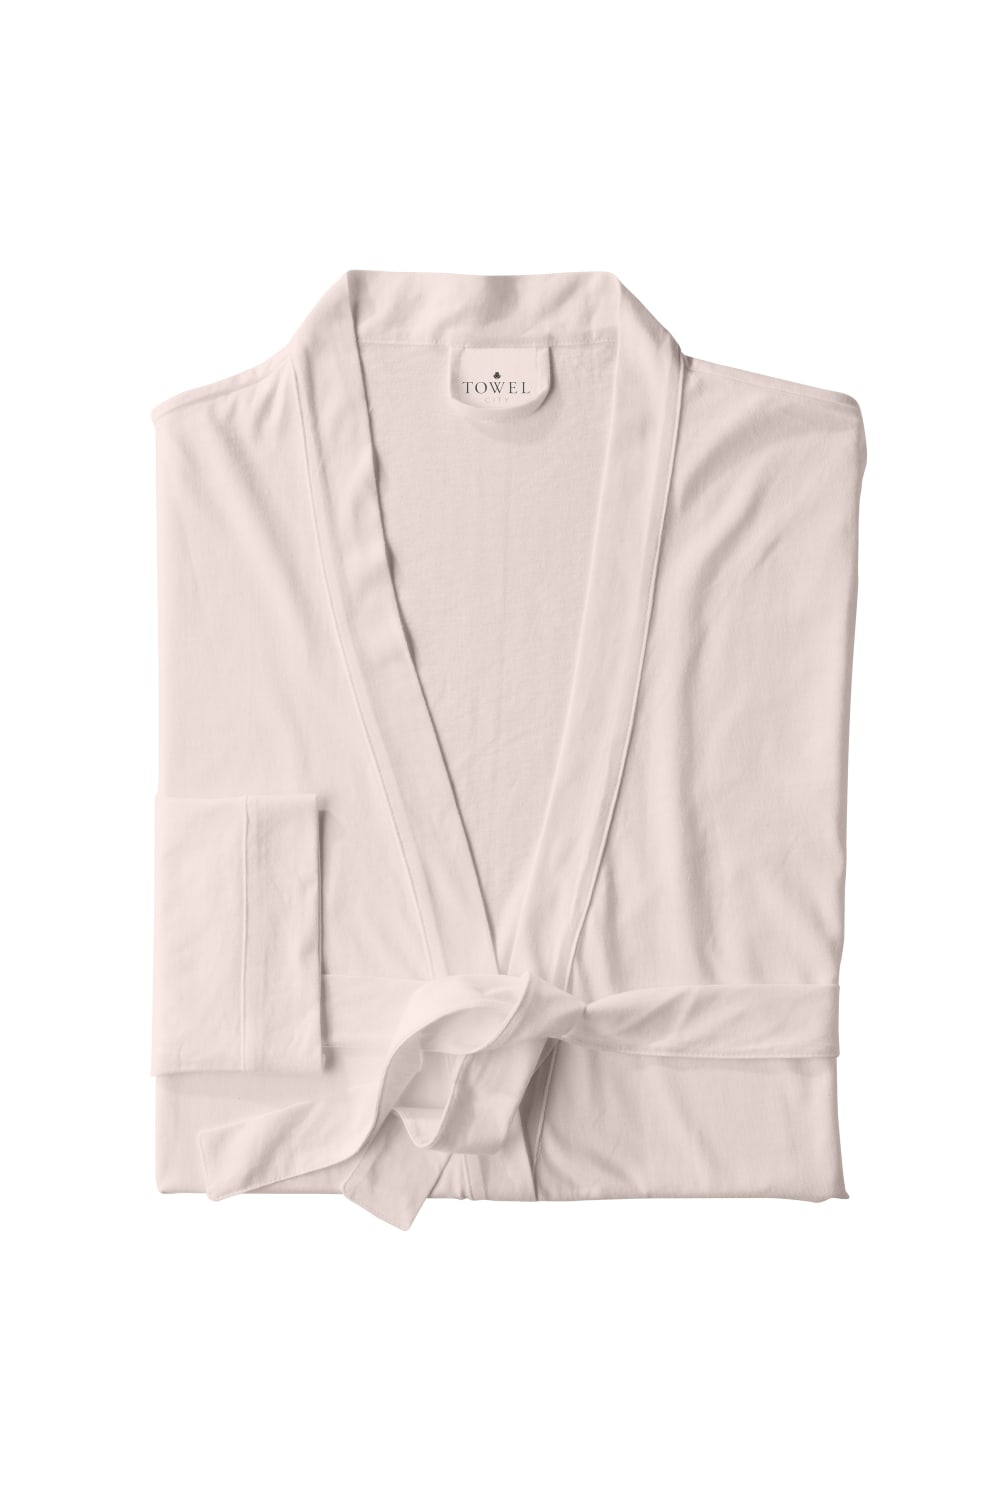 Towel City Womens/Ladies Wrap Bath Robe / Towel (180 GSM) (Light Pink) (L)